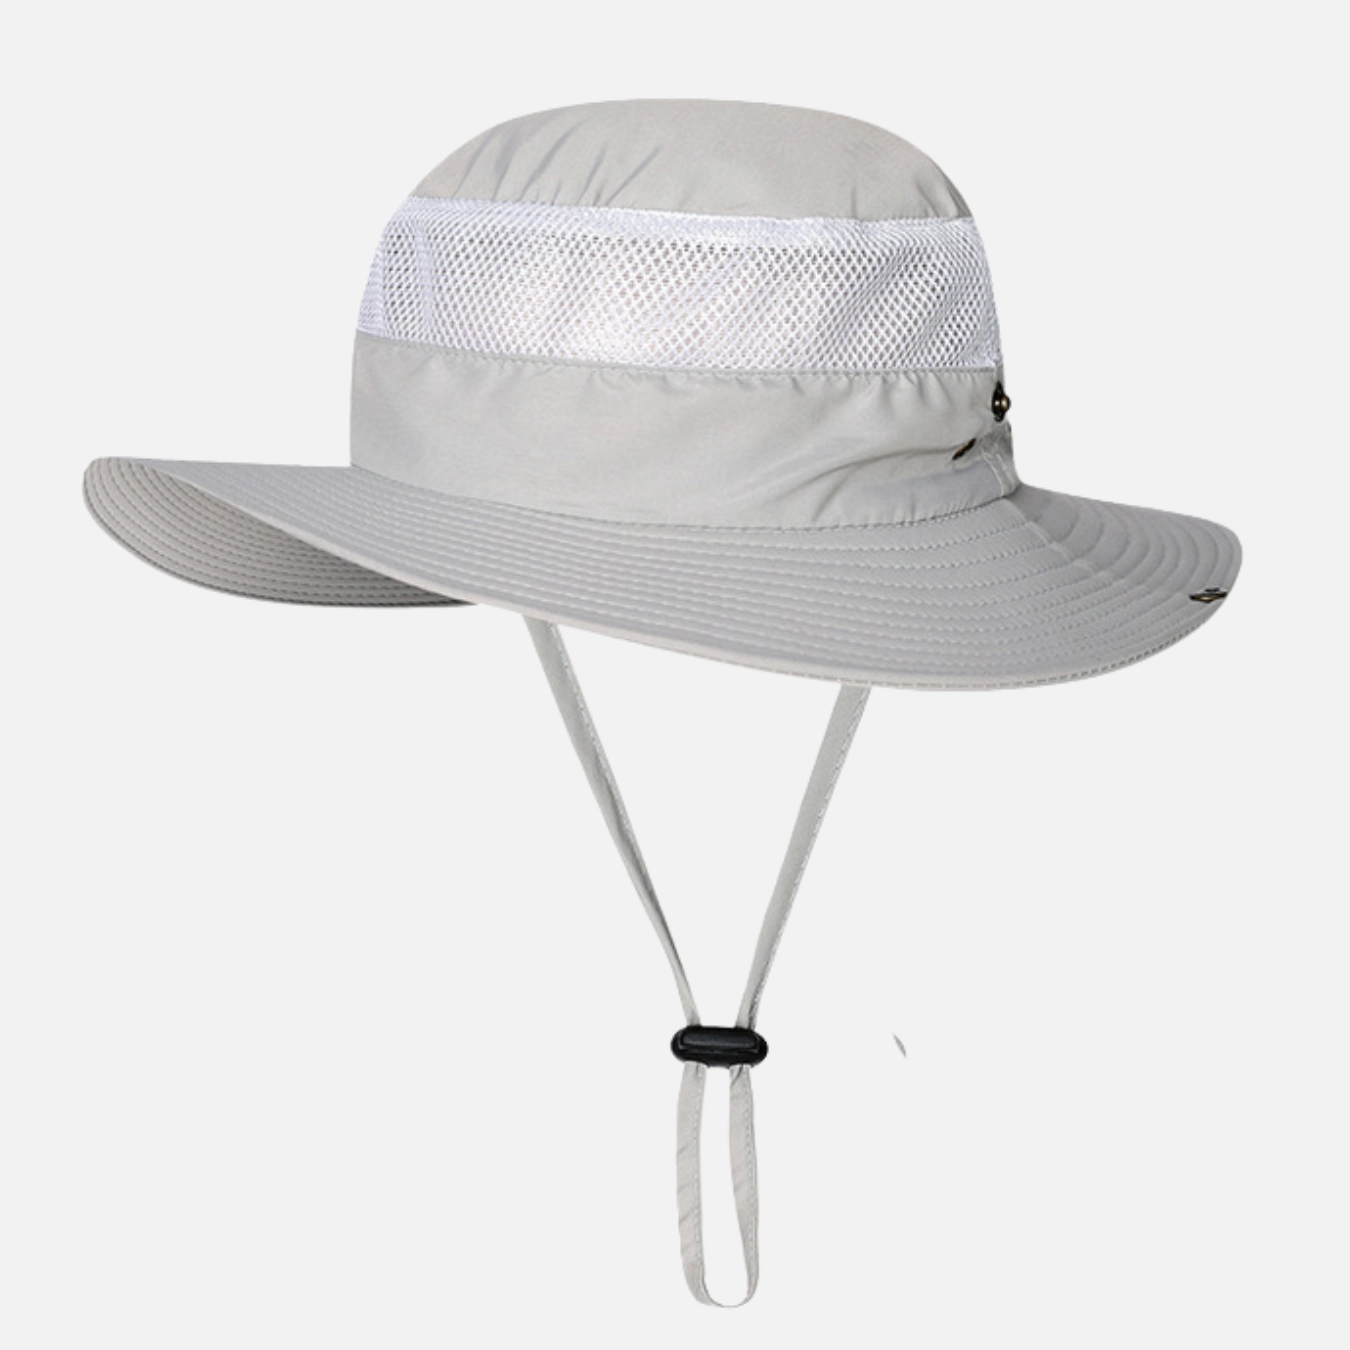 Voyage כובע טיולים רחב שוליים - אפור בהיר פריט שני ב - 35% הנחה 